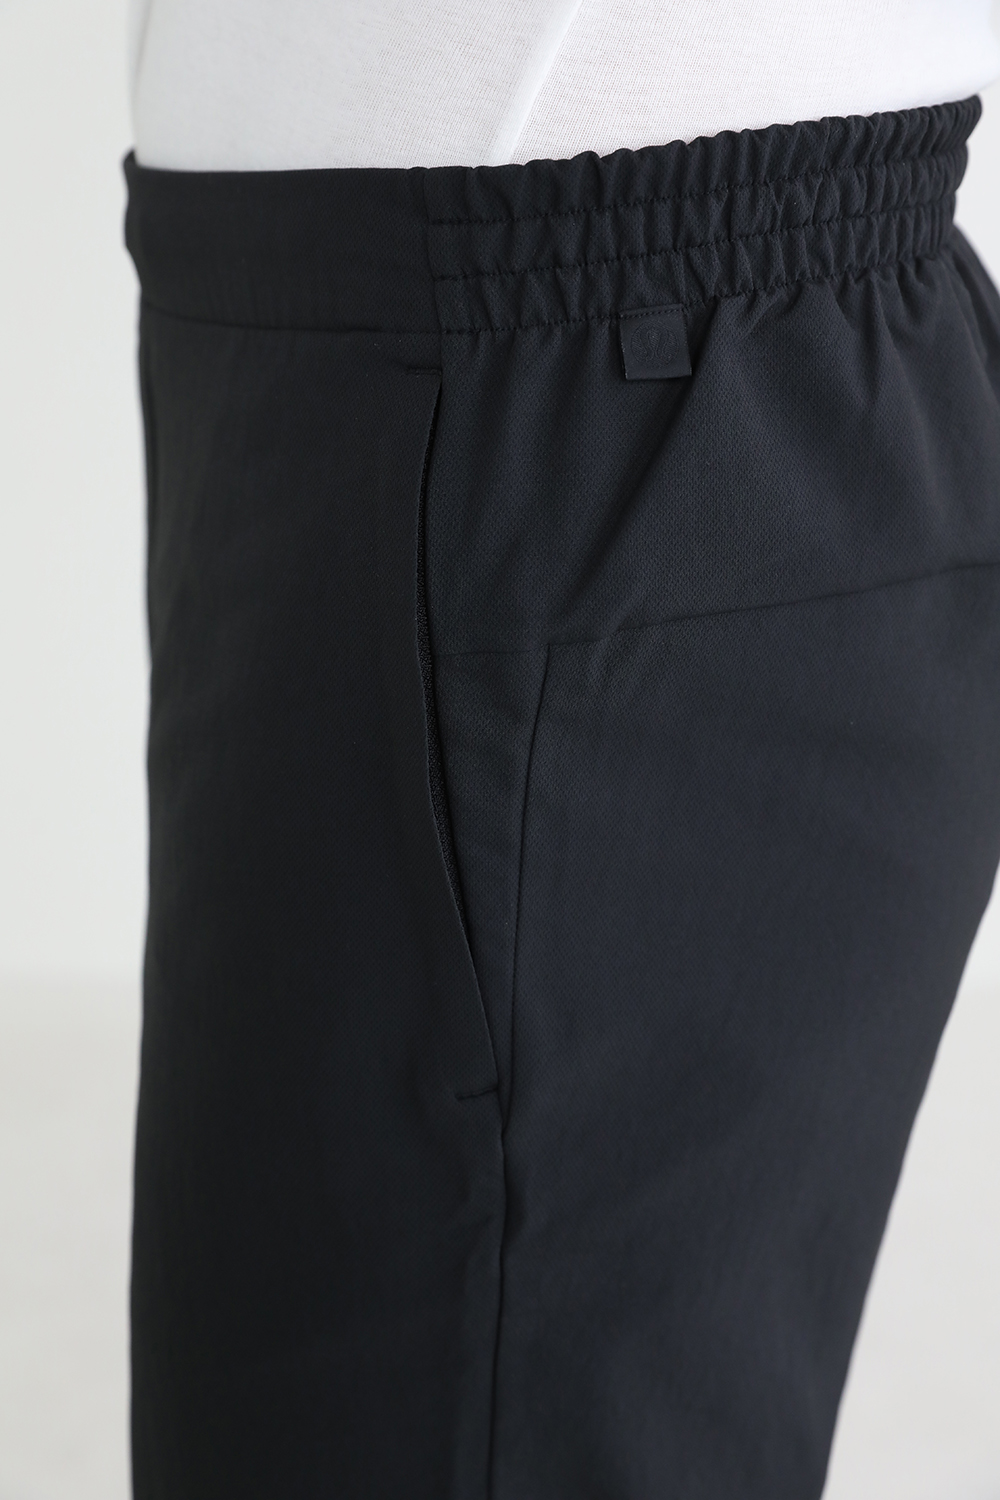 New Venture Trouser Pique LULULEMON